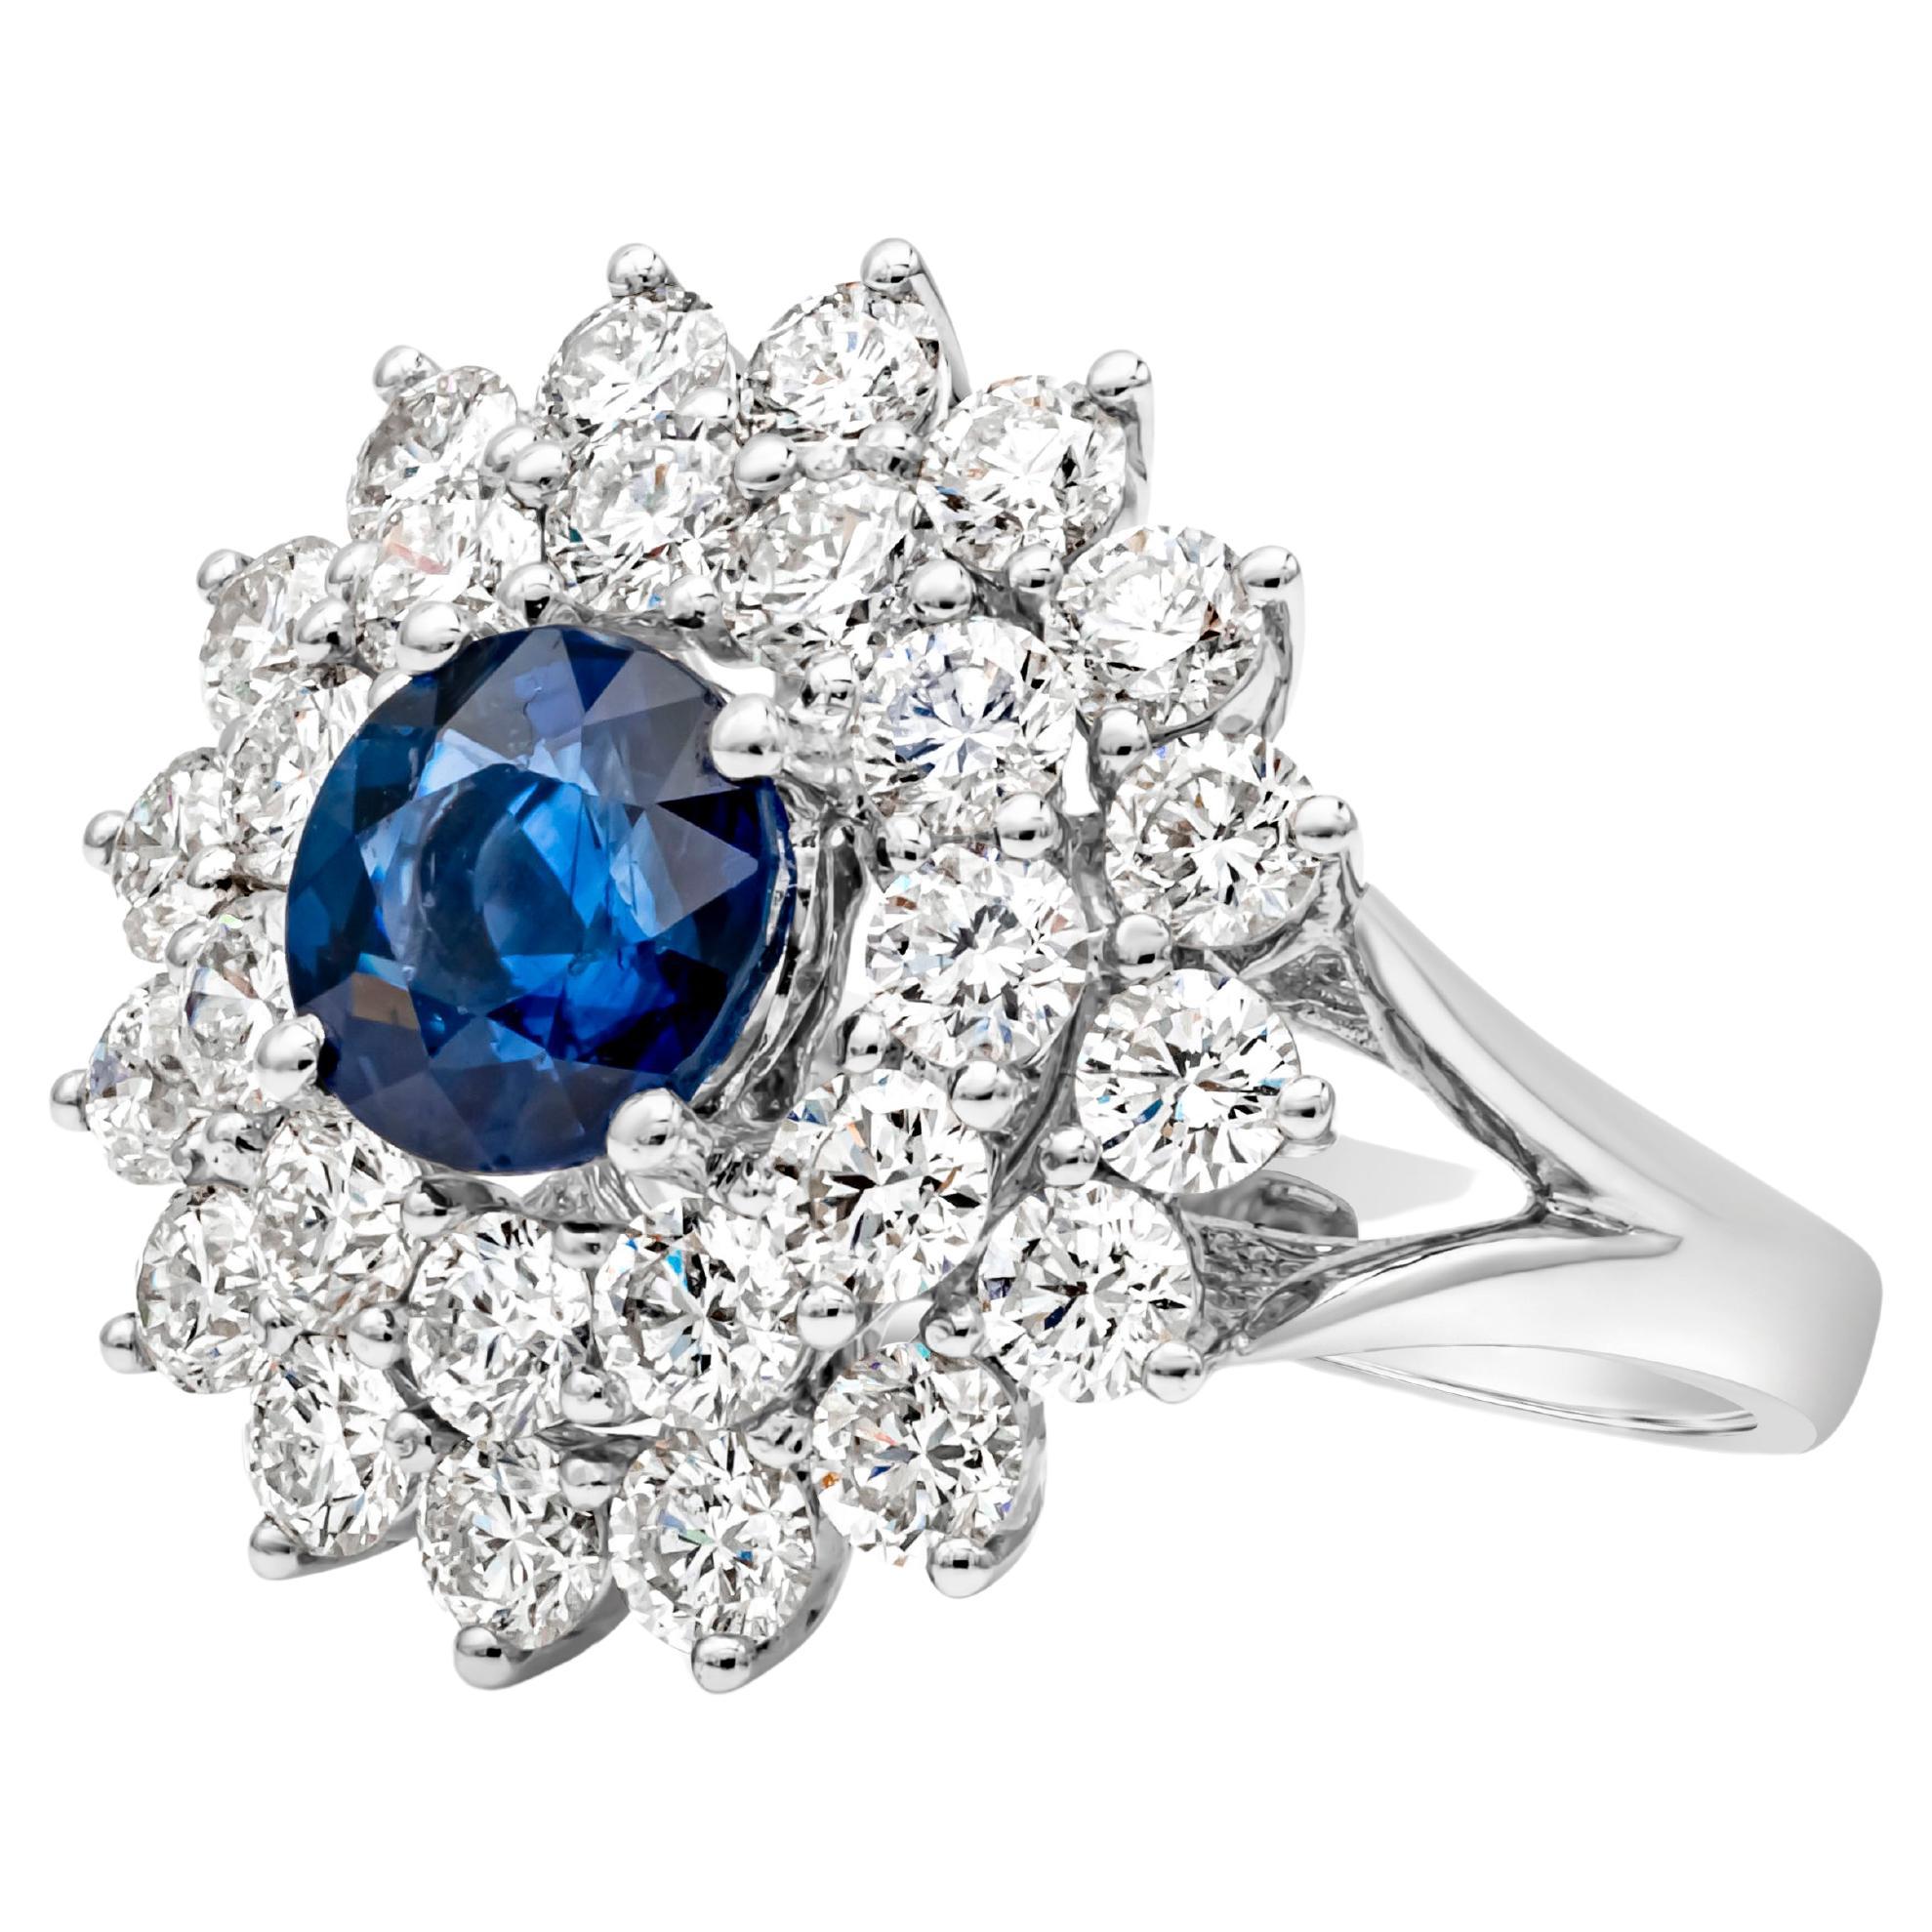 Roman Malakov 2.13 Carats Blue Sapphire and Diamond Double Halo Engagement Ring